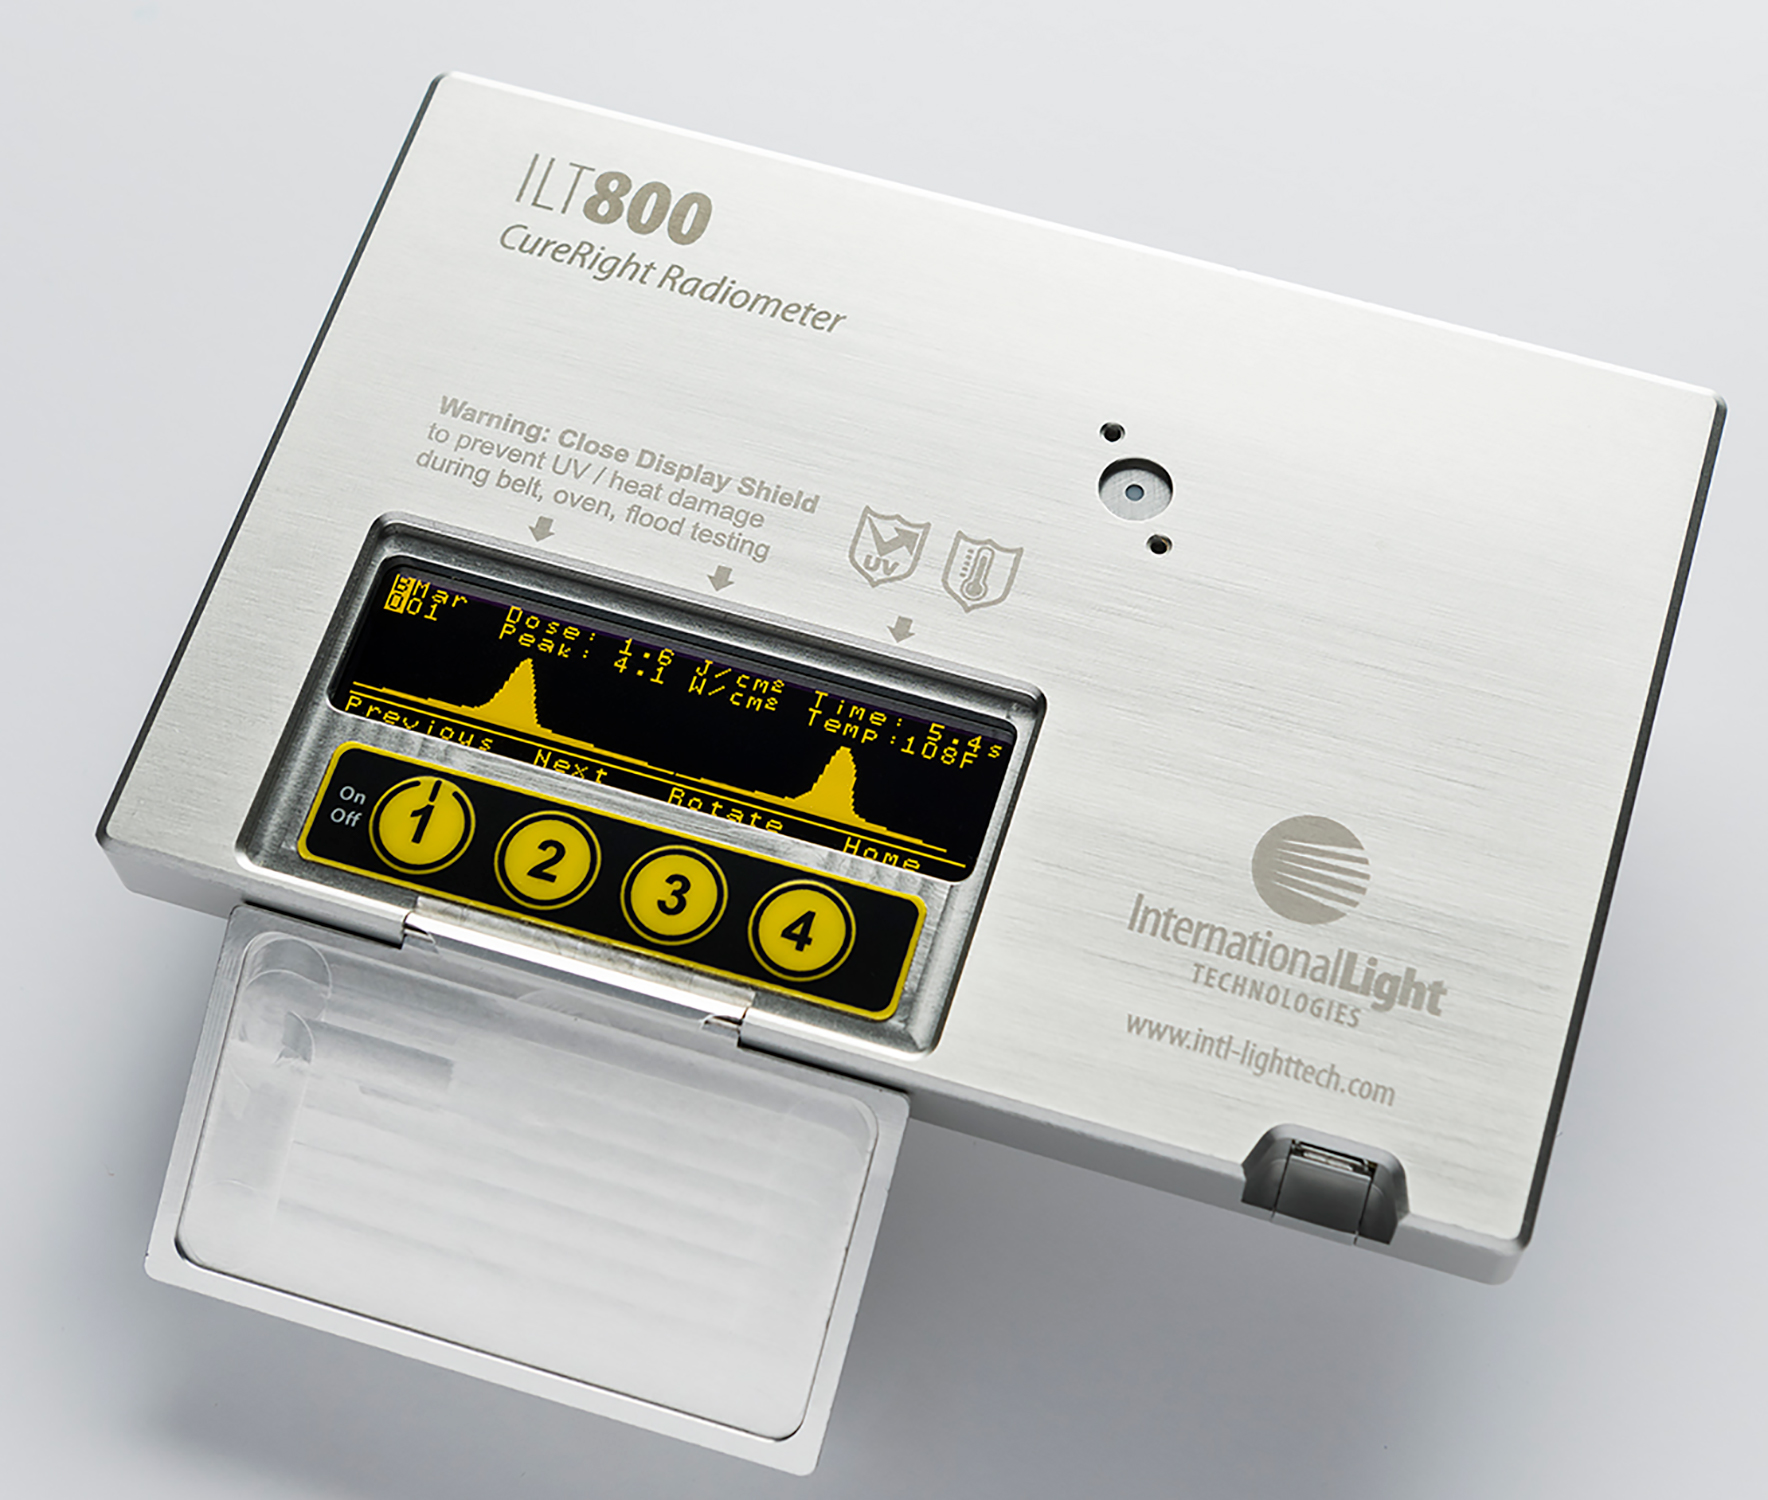 ILT800 Profiling Belt Radiometer